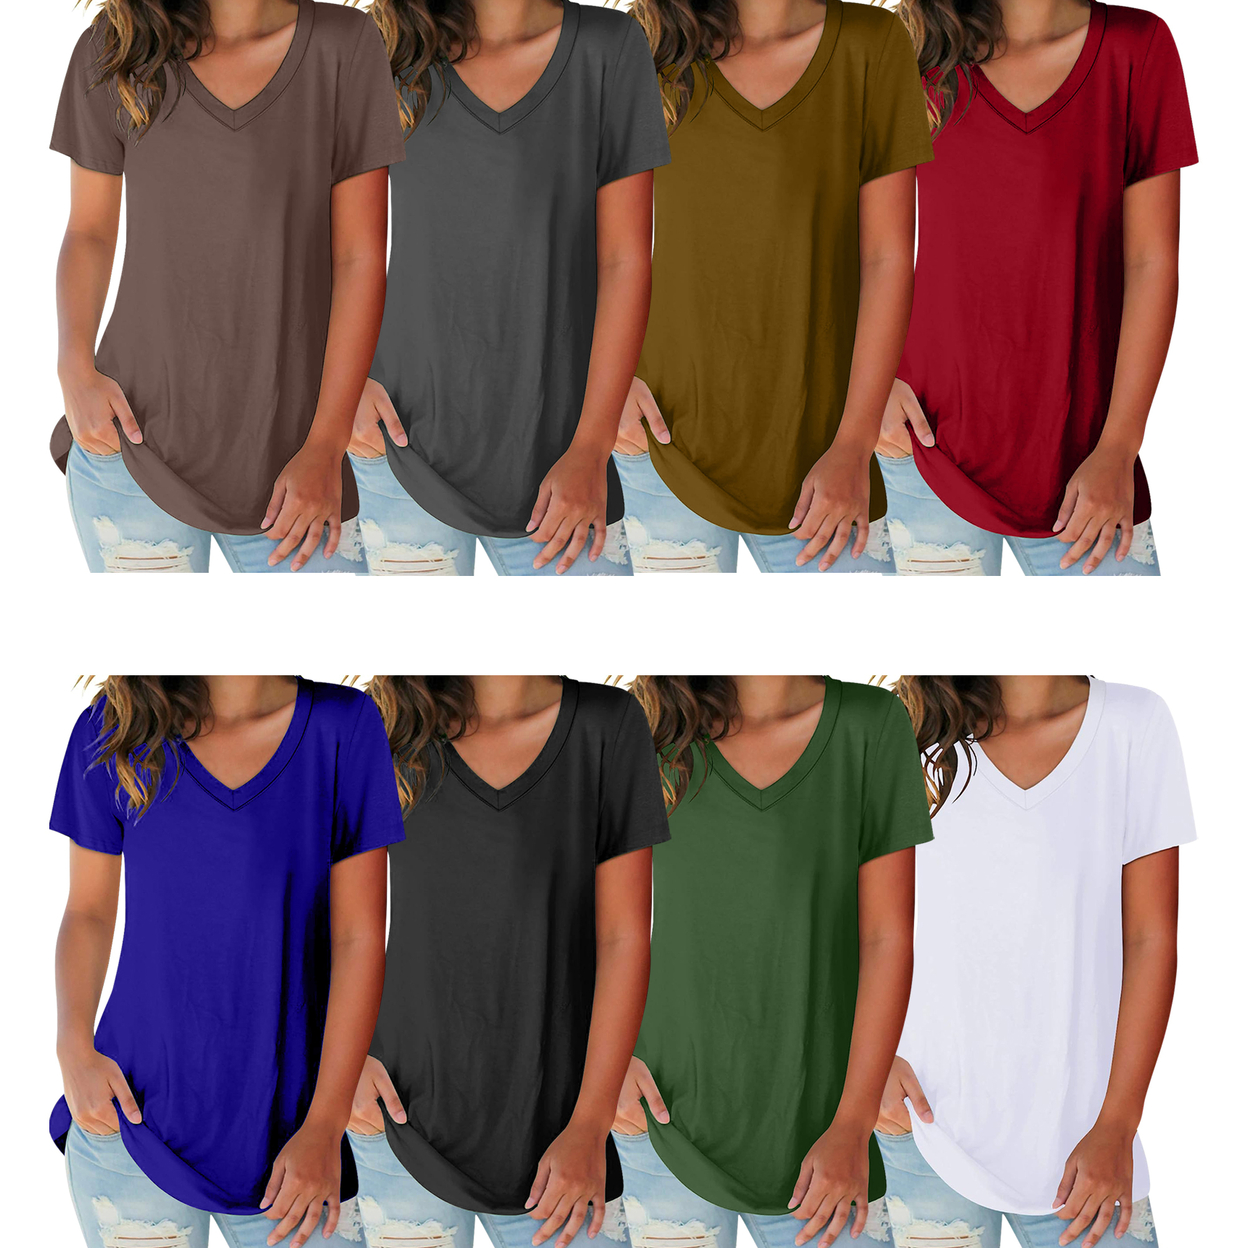 3-Pack: Women's Ultra Soft Smooth Cotton Blend Basic V-Neck Short Sleeve Shirts - Black, Navy, Brown, Large